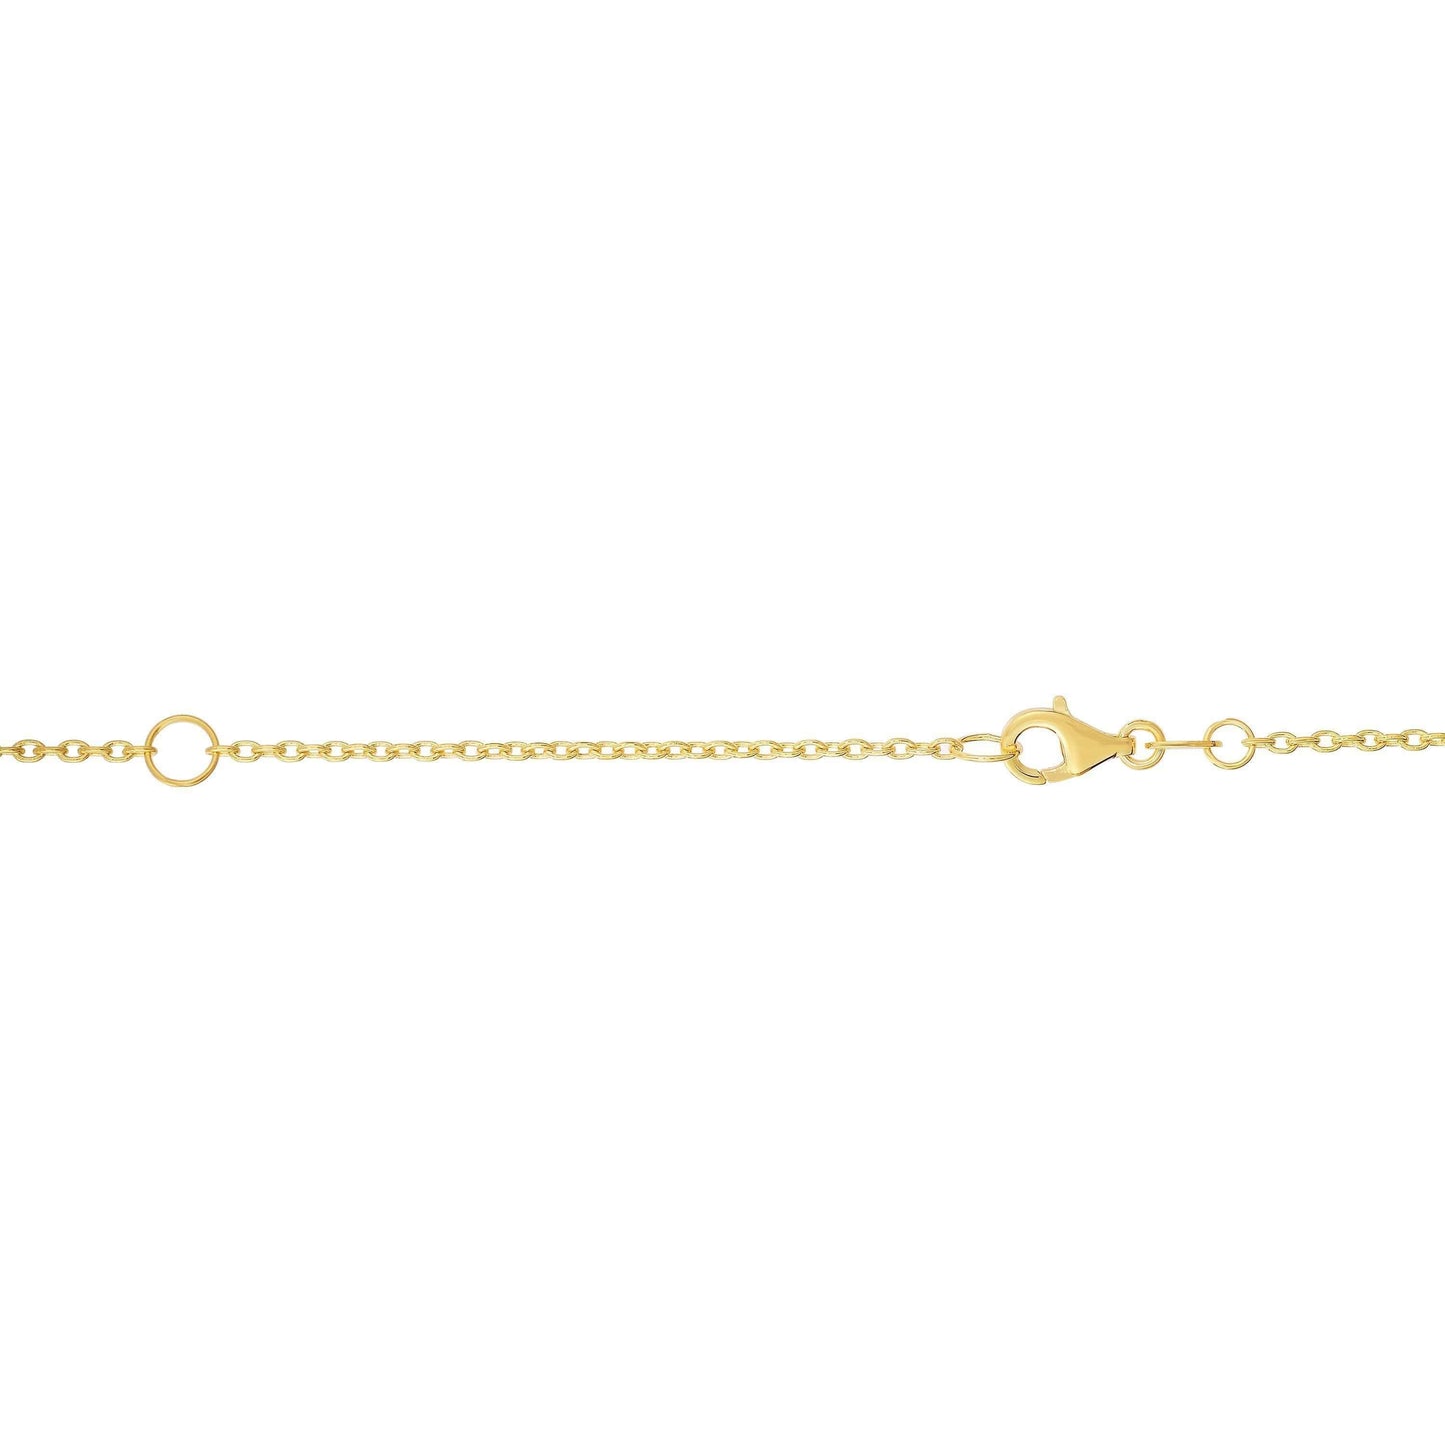 14K 1/4 Carat Diamond Pendant with Adjustable 16-18" Necklace